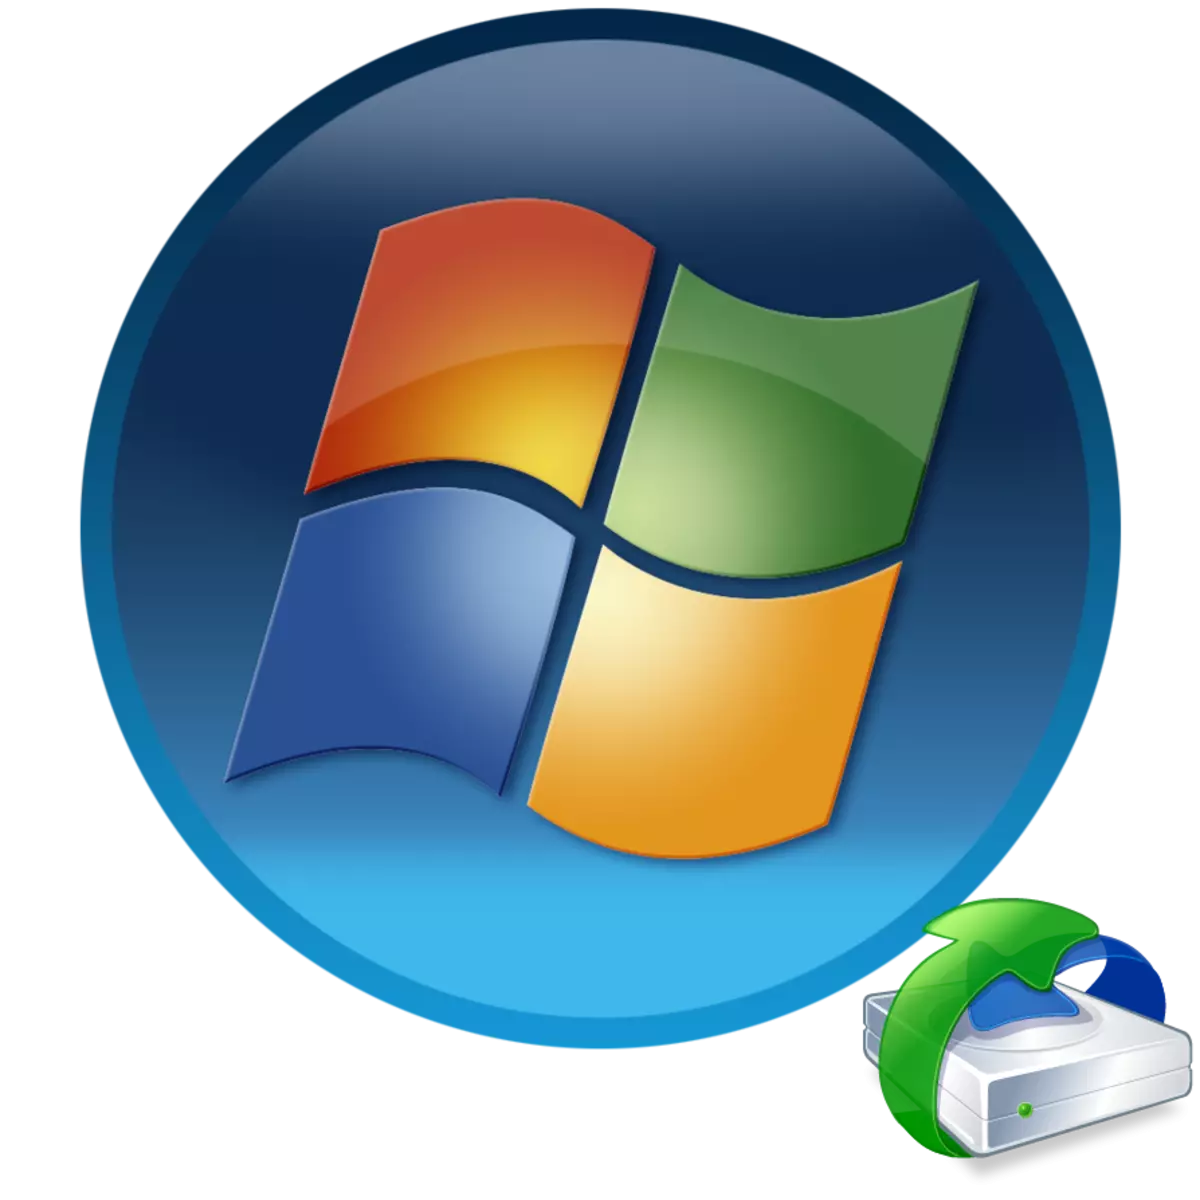 System-bestannen werstelle yn Windows 7